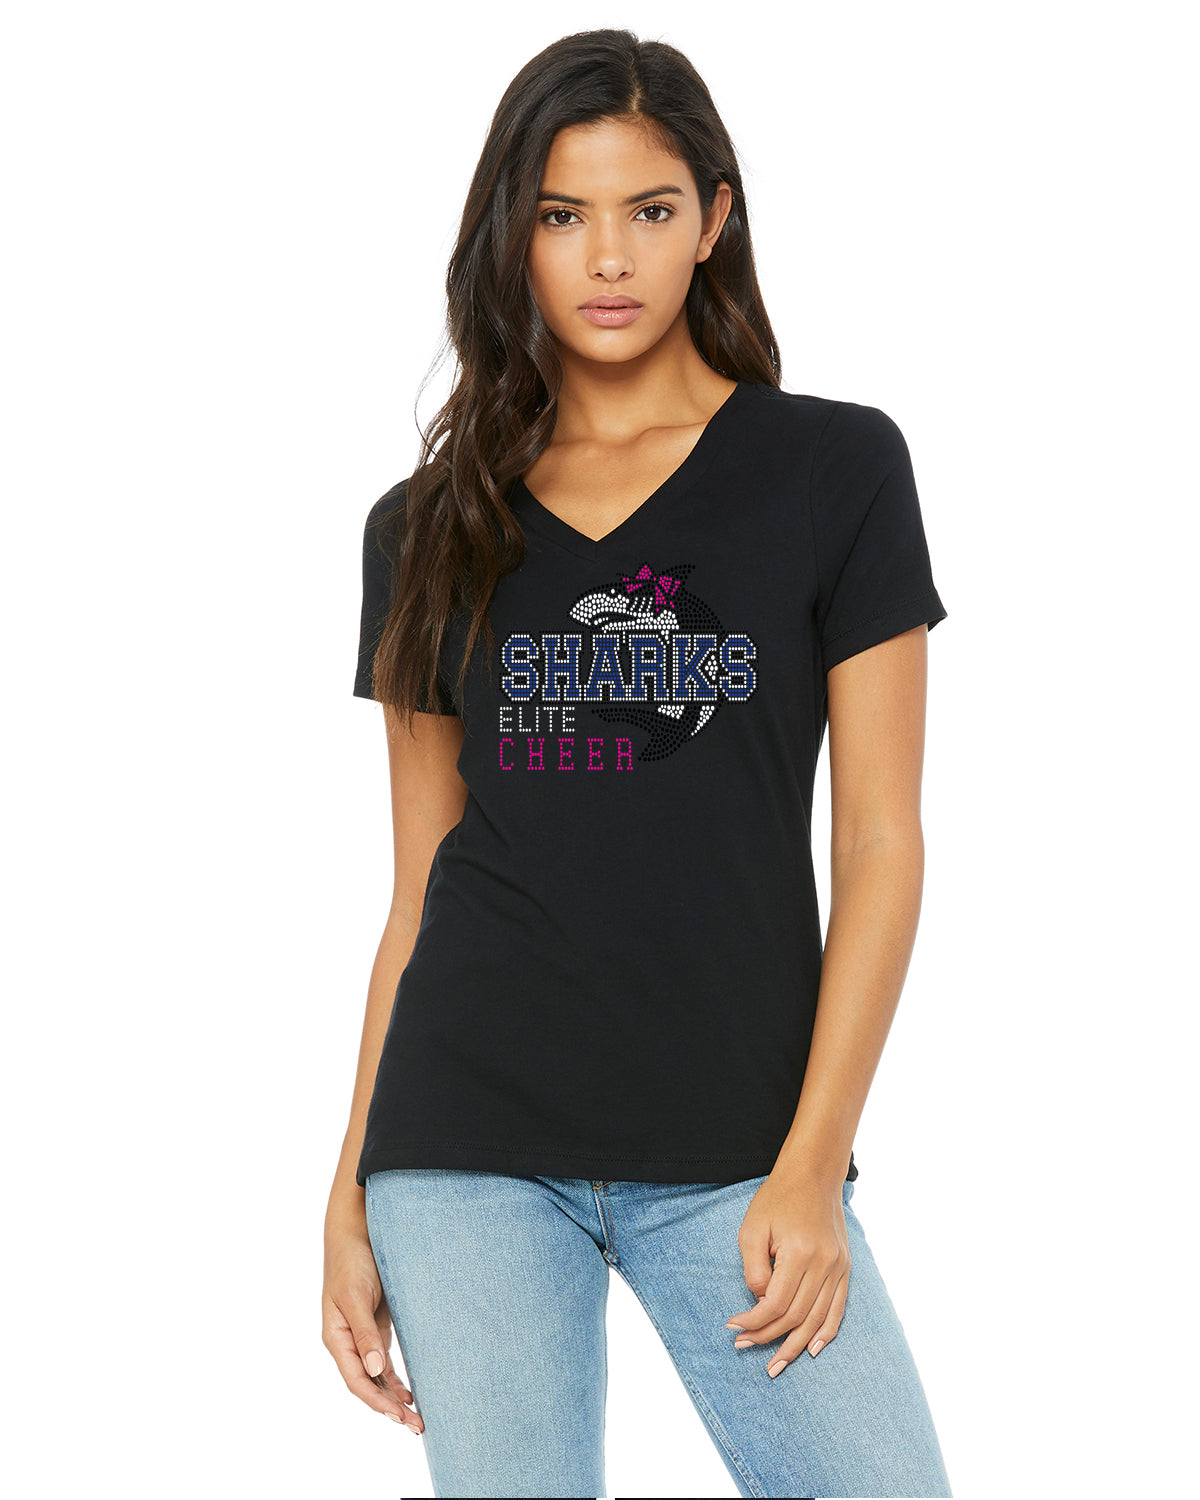 Shark Elite Ladies T- Shirt